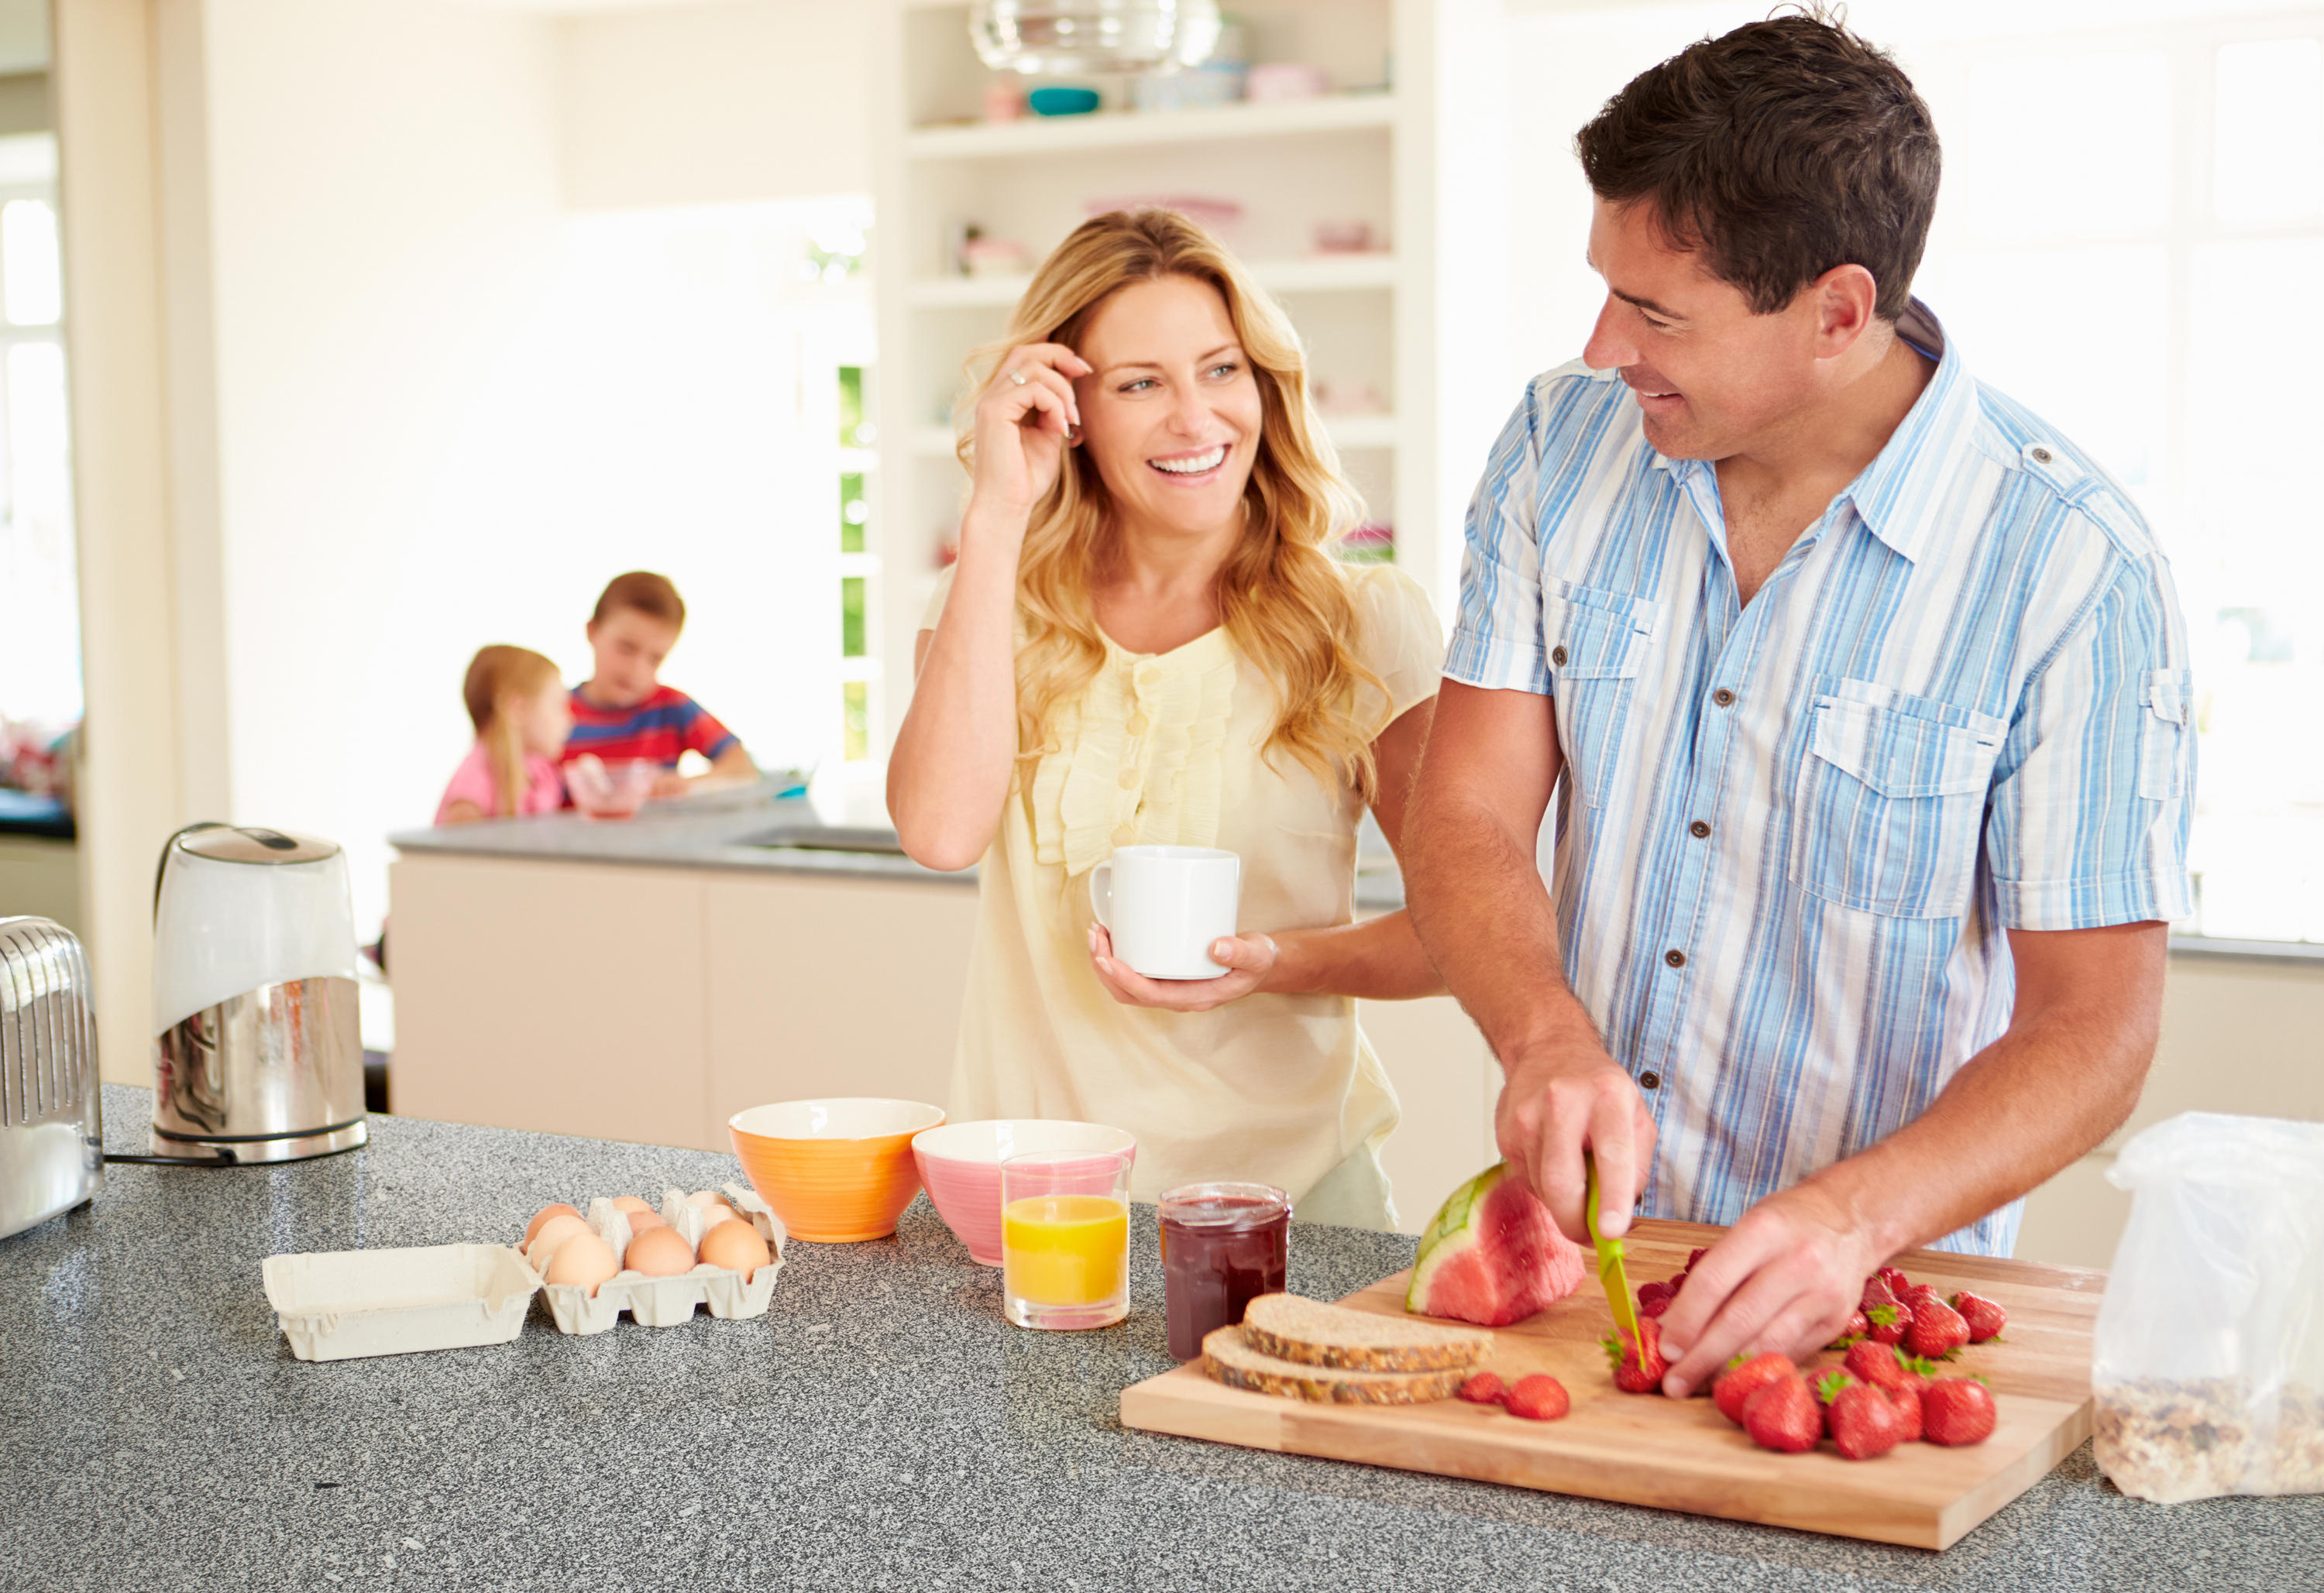 I m preparing. Семья на кухне. Мужчина и женщина завтракают. Счастливая семья на кухне. Семья кухня обед.